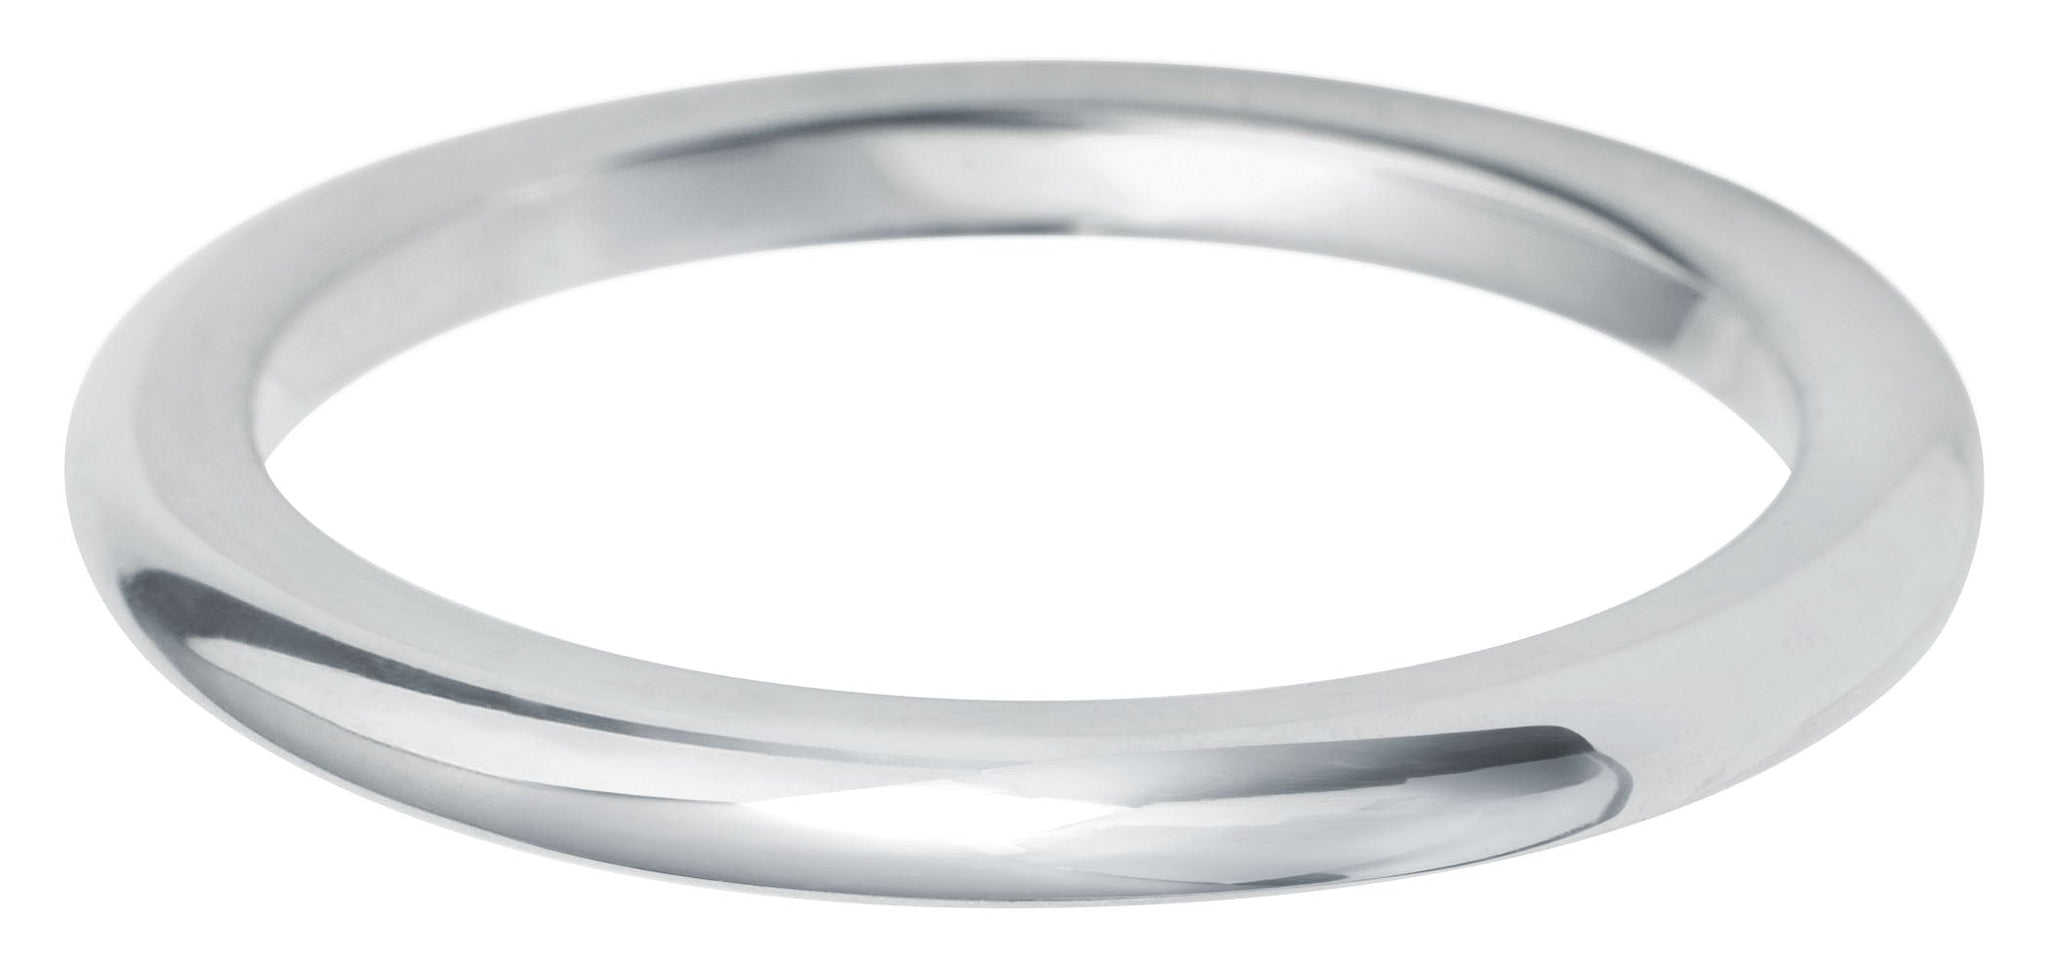 2mm Paris lightweight Wedding Ring